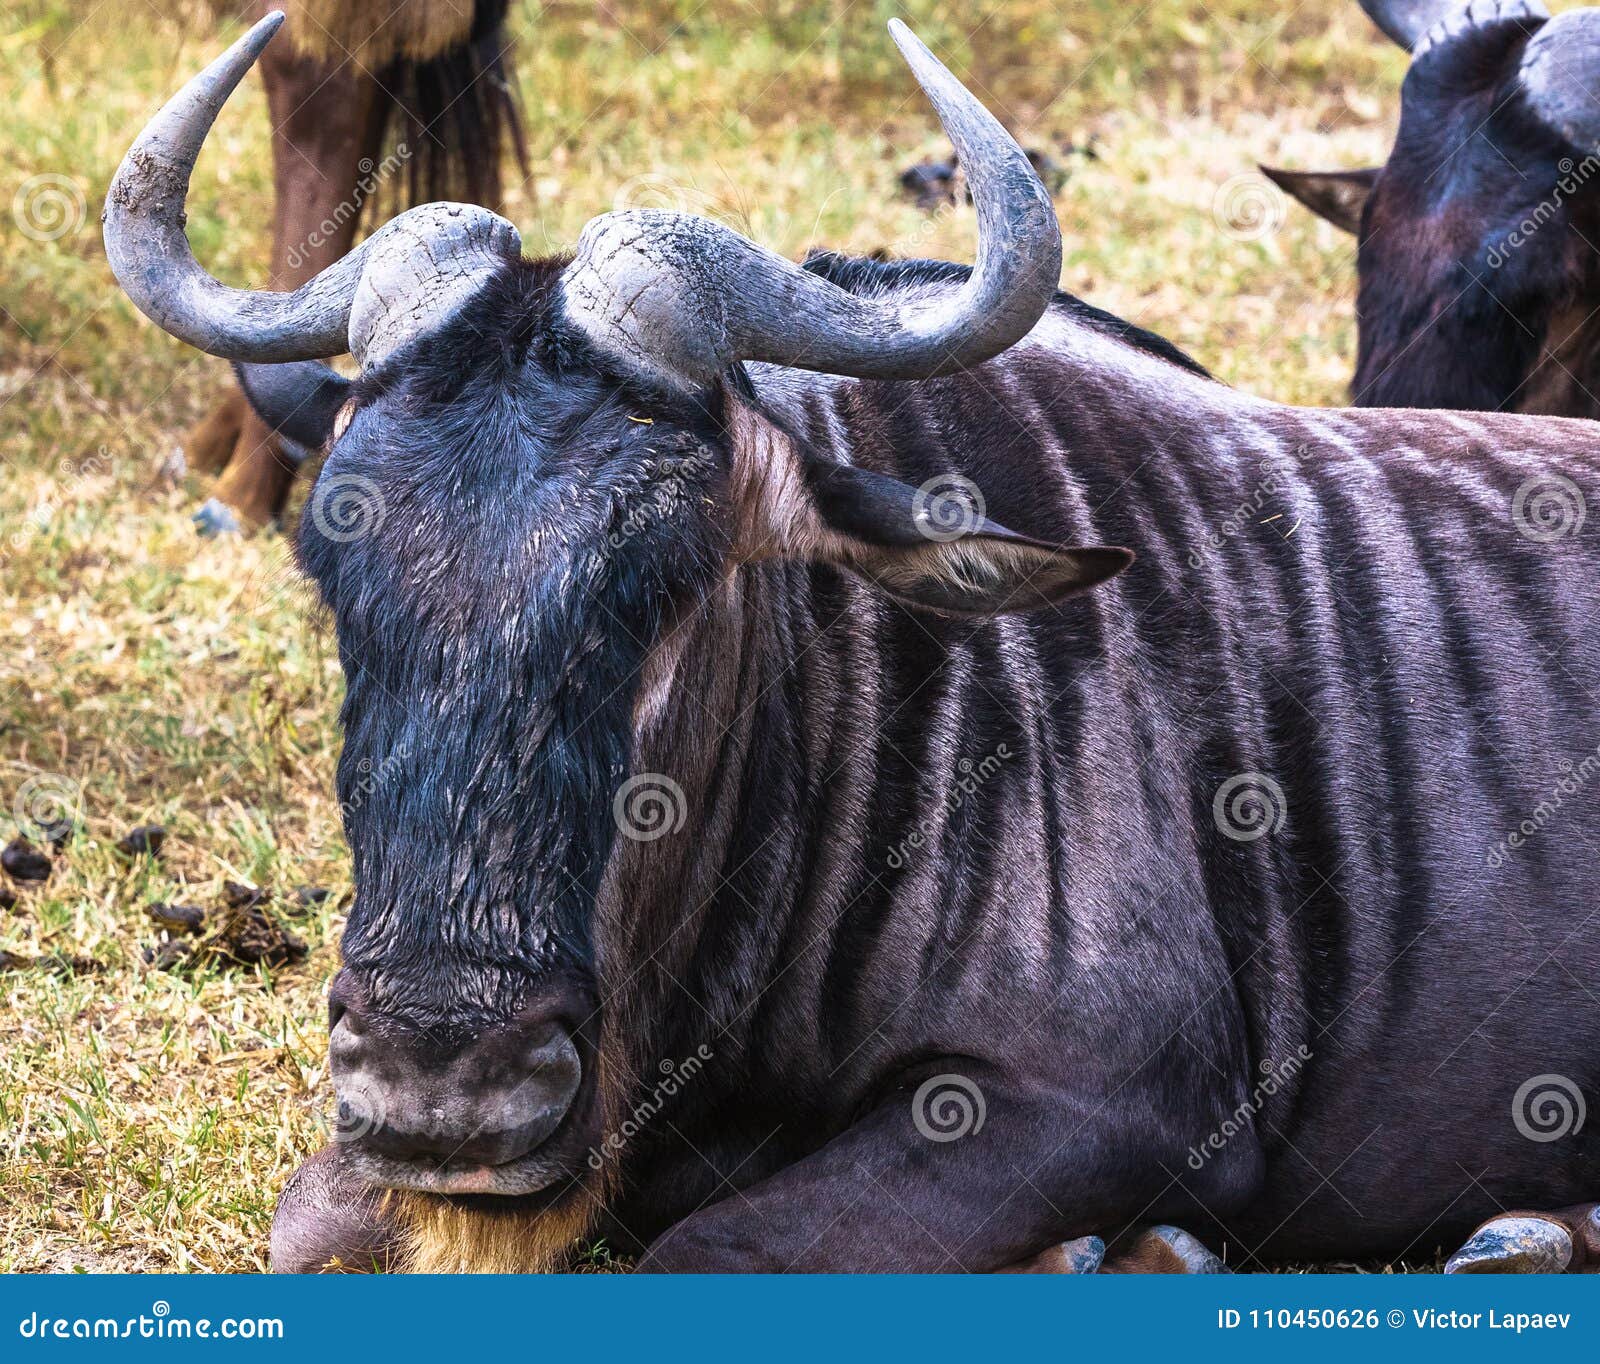 wildebeest close up. crater ngorongoro, tanzania, africa